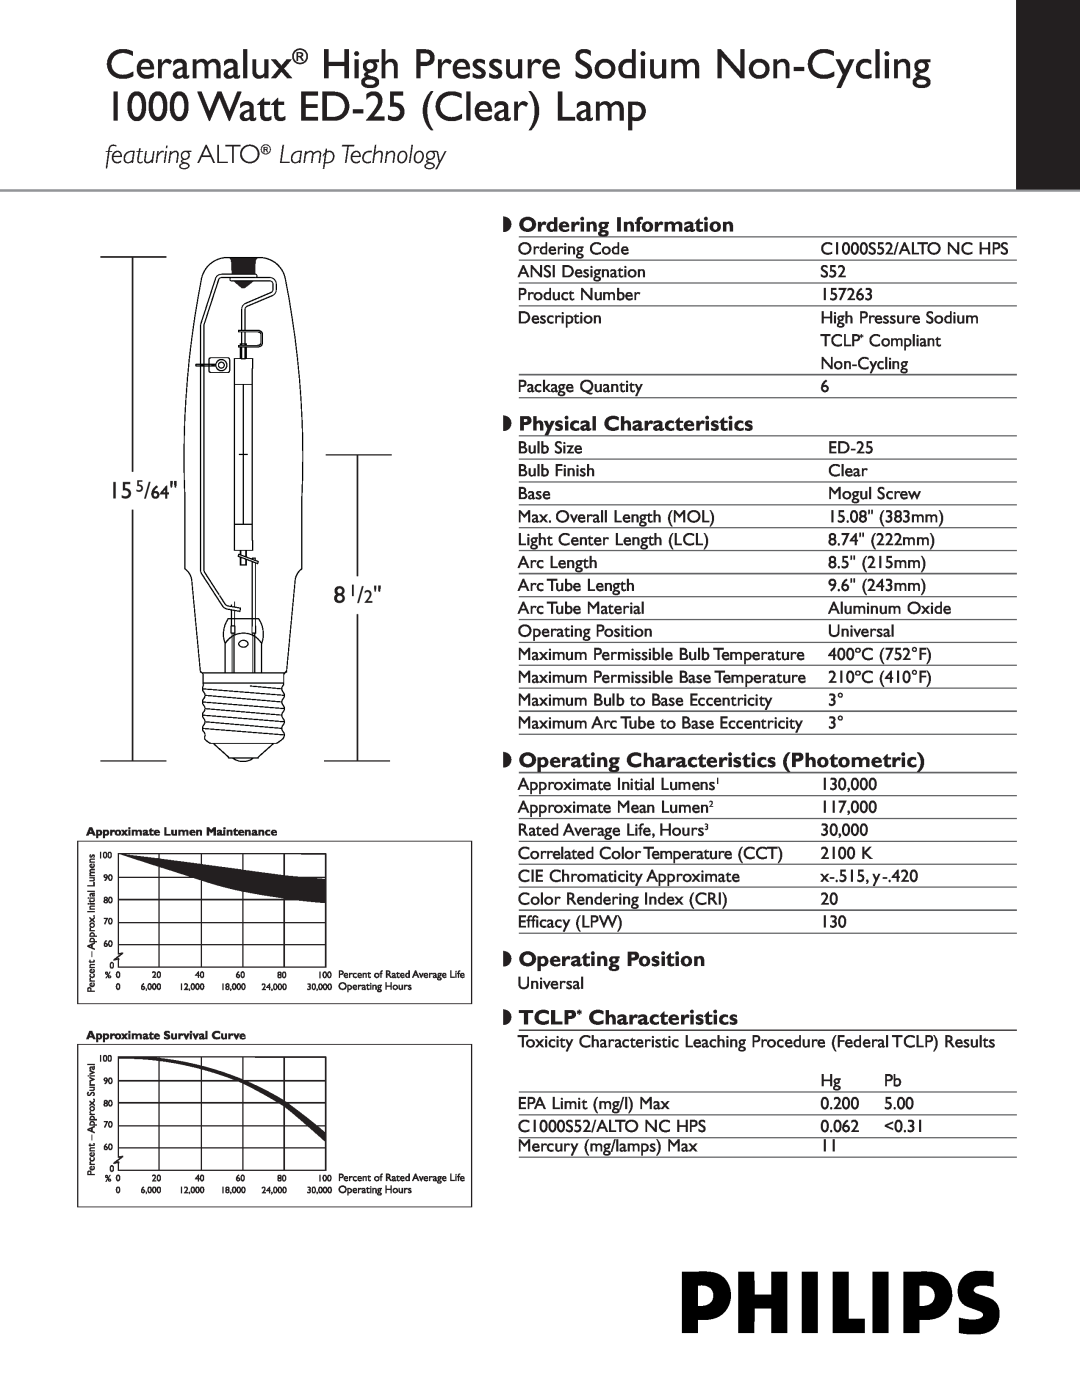 Philips 157263 manual Ceramalux High Pressure Sodium Non-Cycling 1000 Watt ED-25 Clear Lamp, Ordering Information 